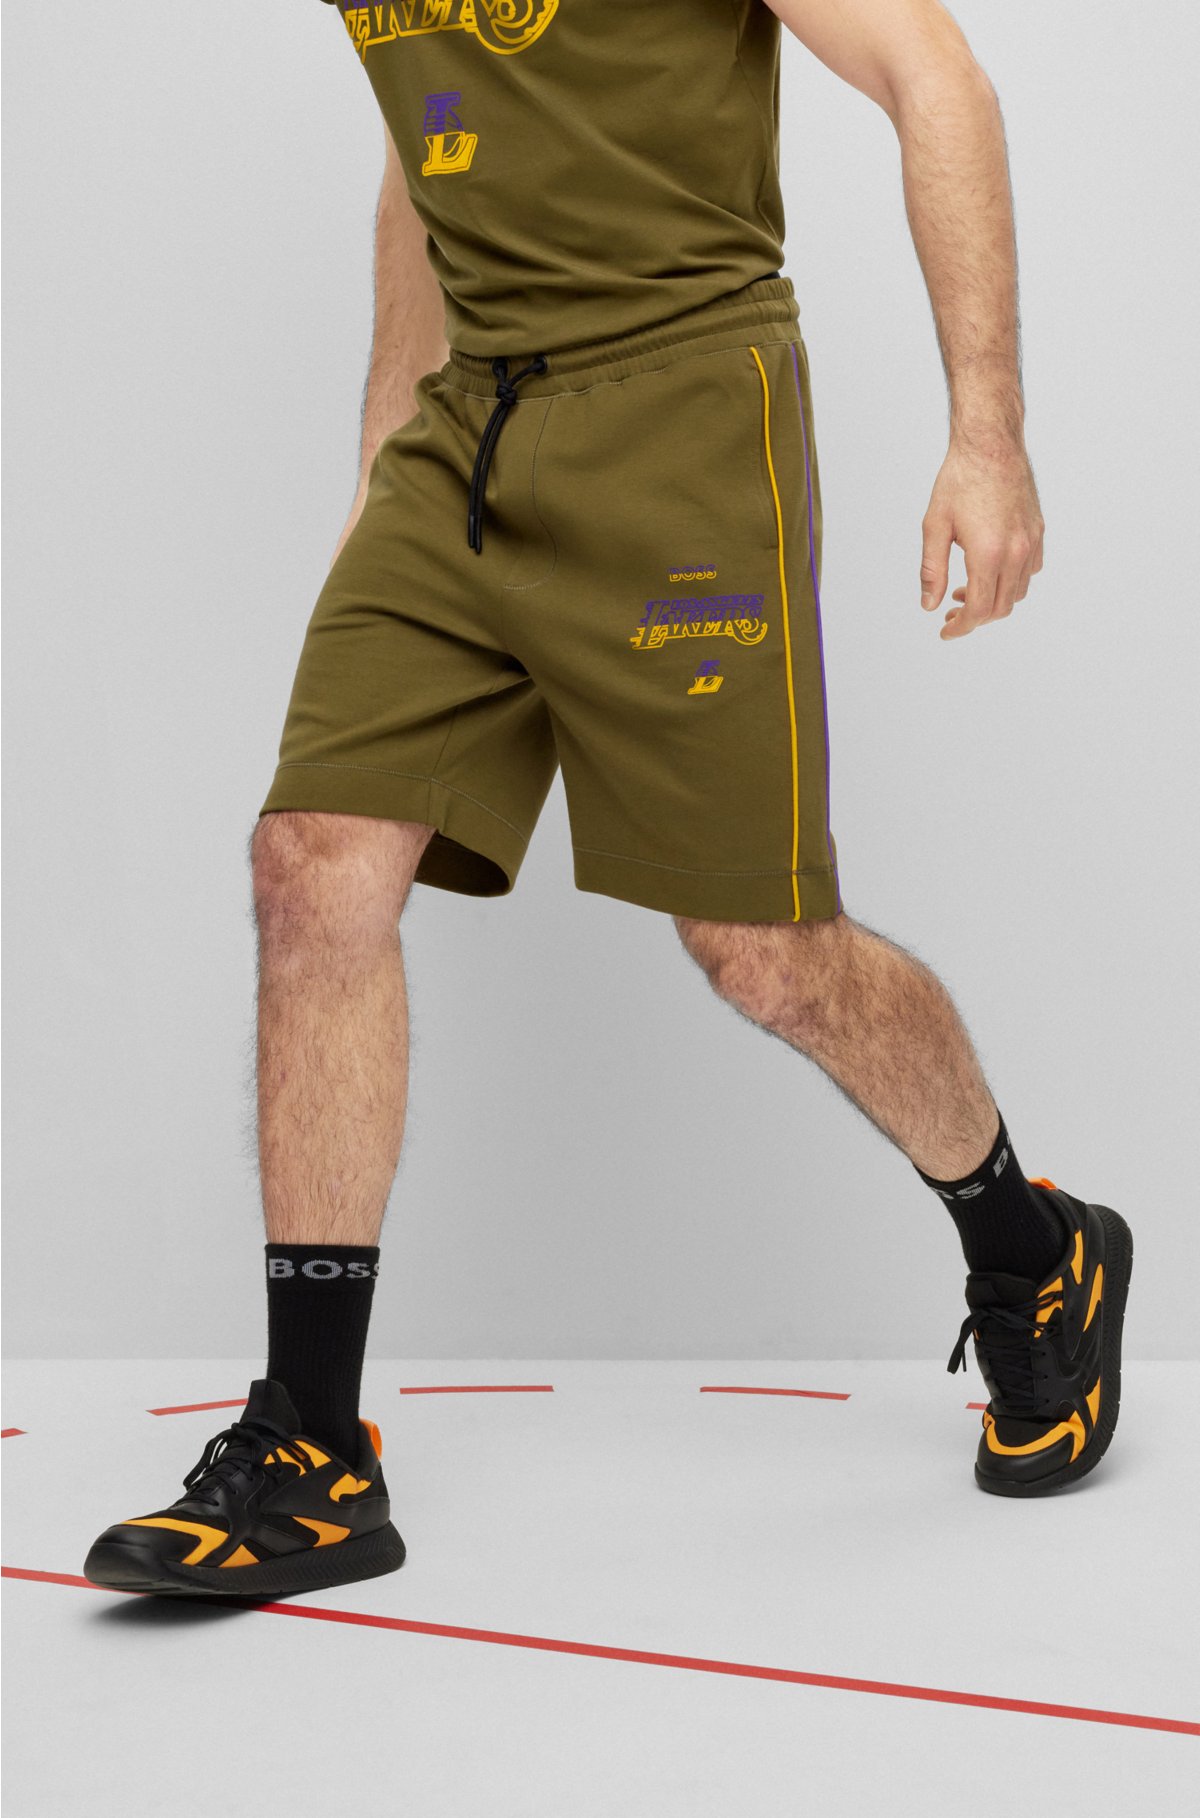 L.a. lakers printed cotton blend shorts - New Era - Men